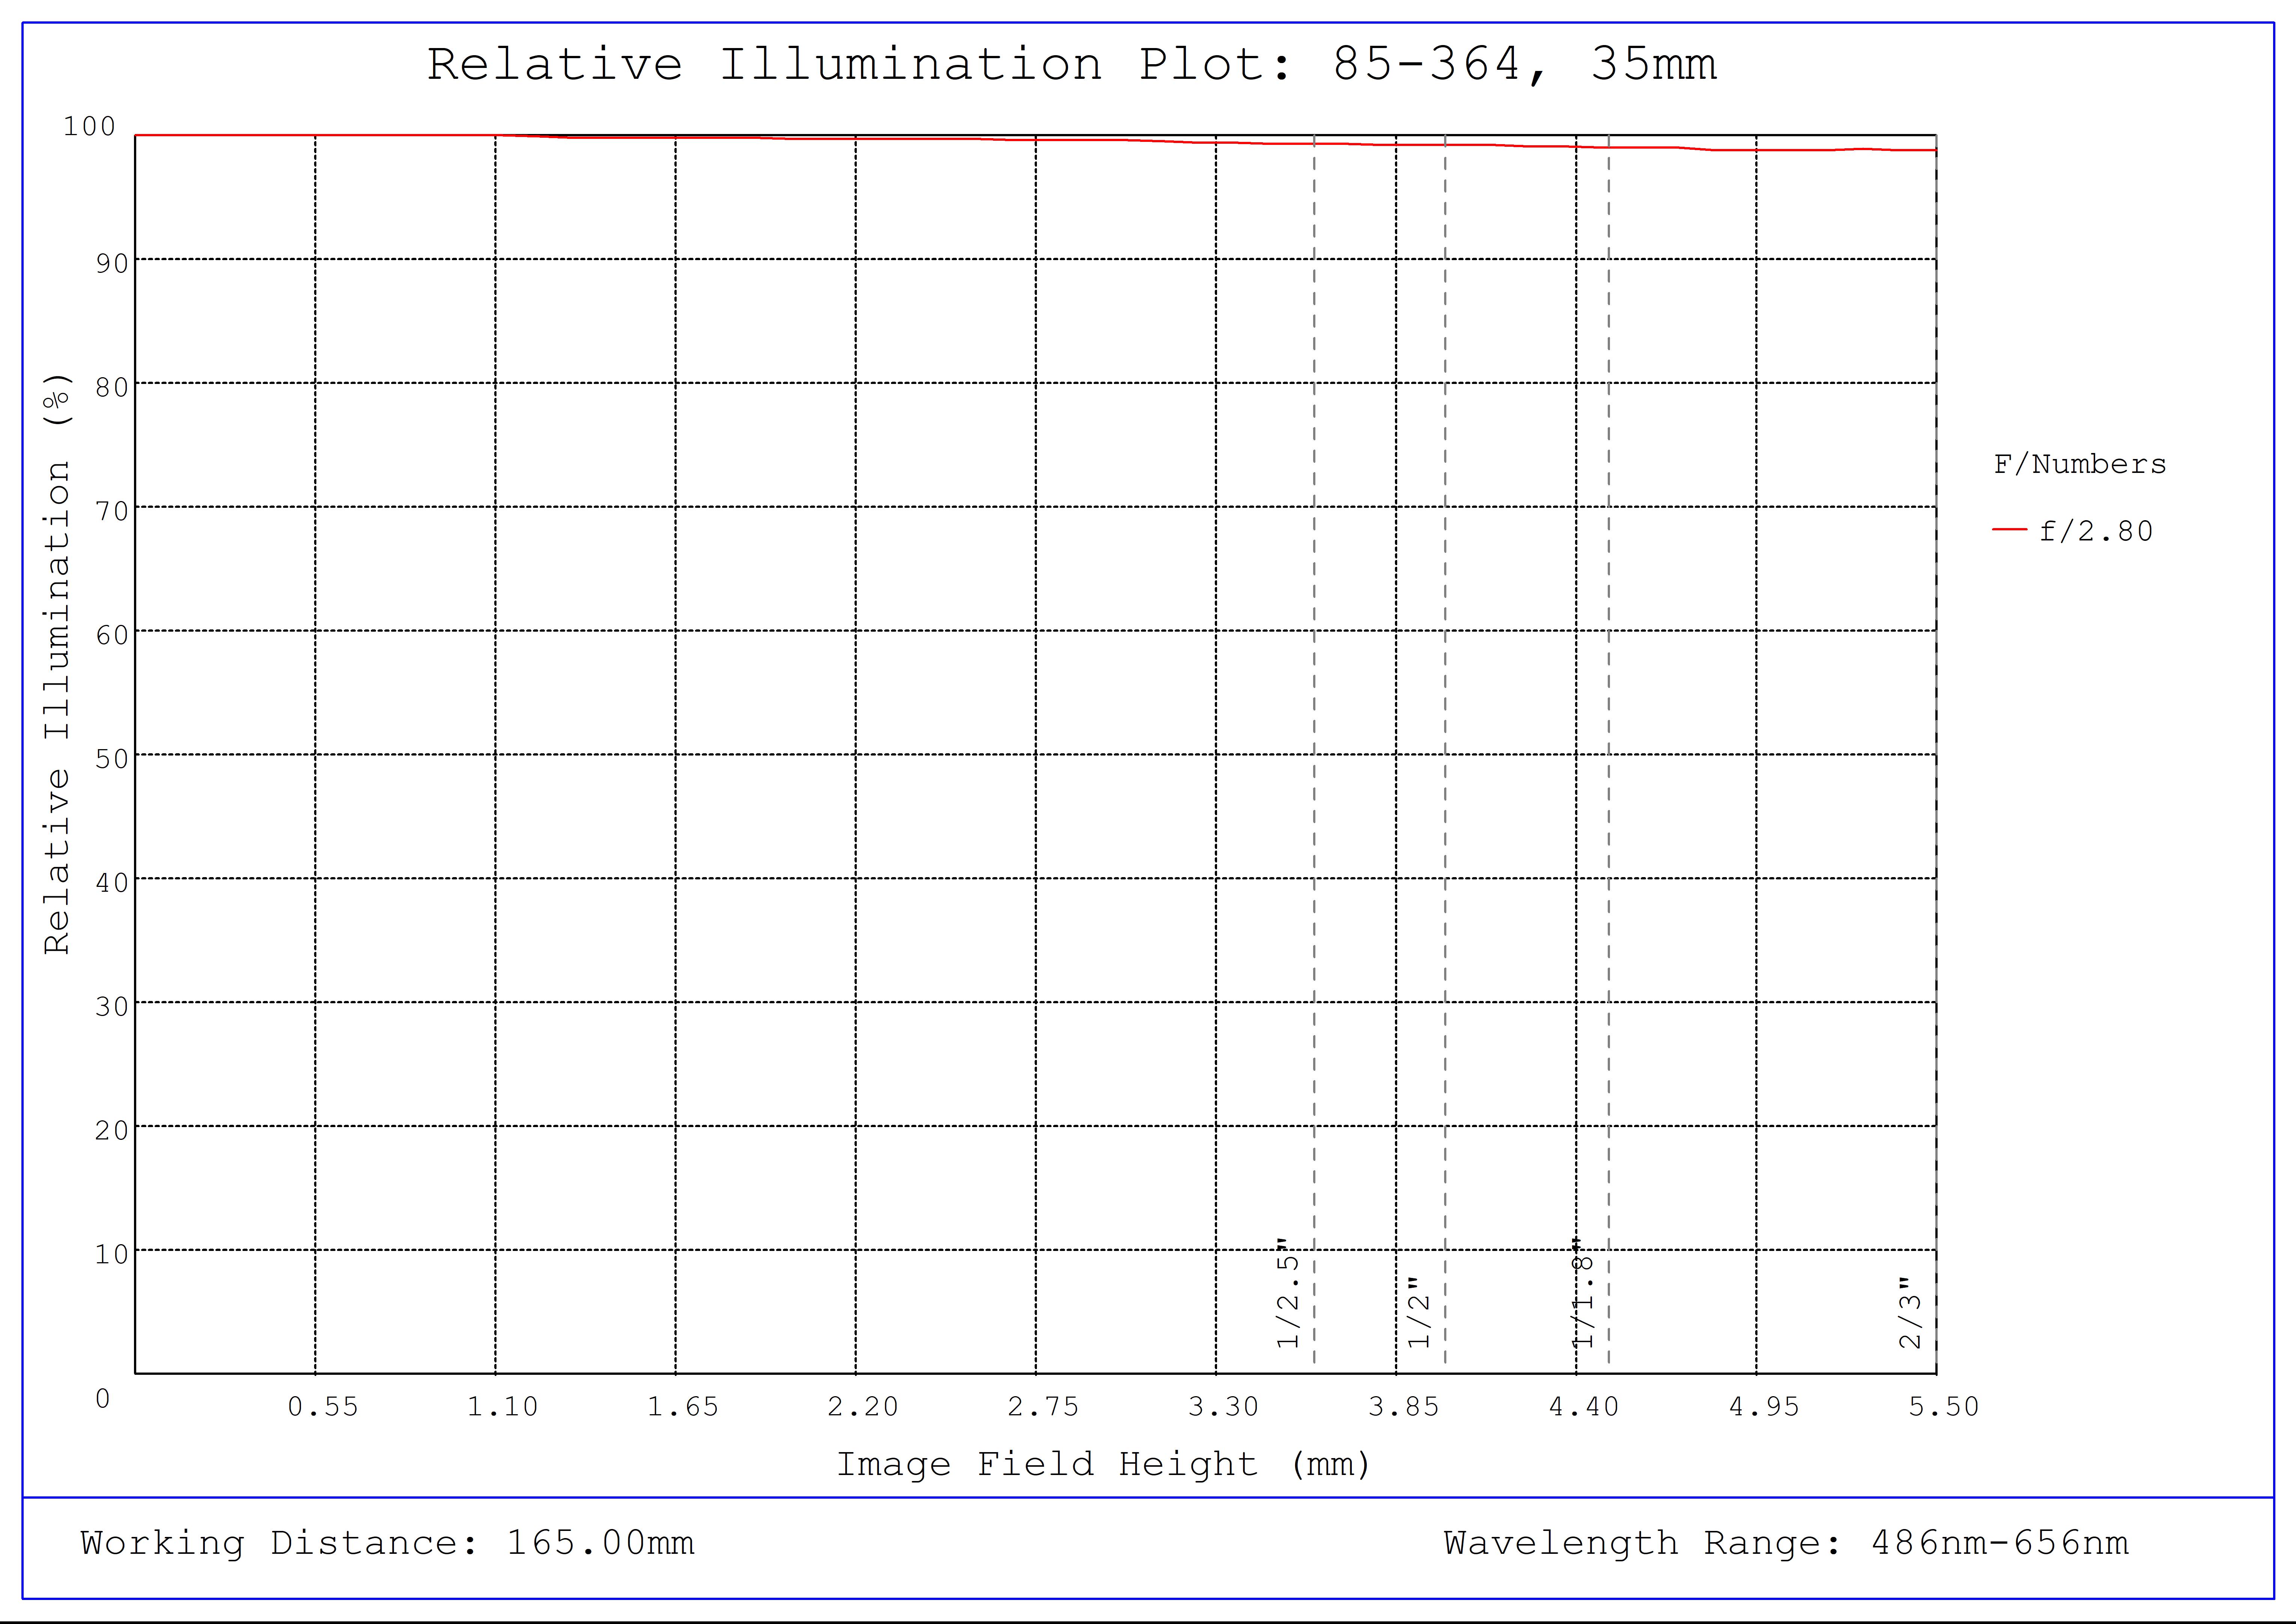 #85-364, 35mm, f/2.8 Ci Series Fixed Focal Length Lens, Relative Illumination Plot